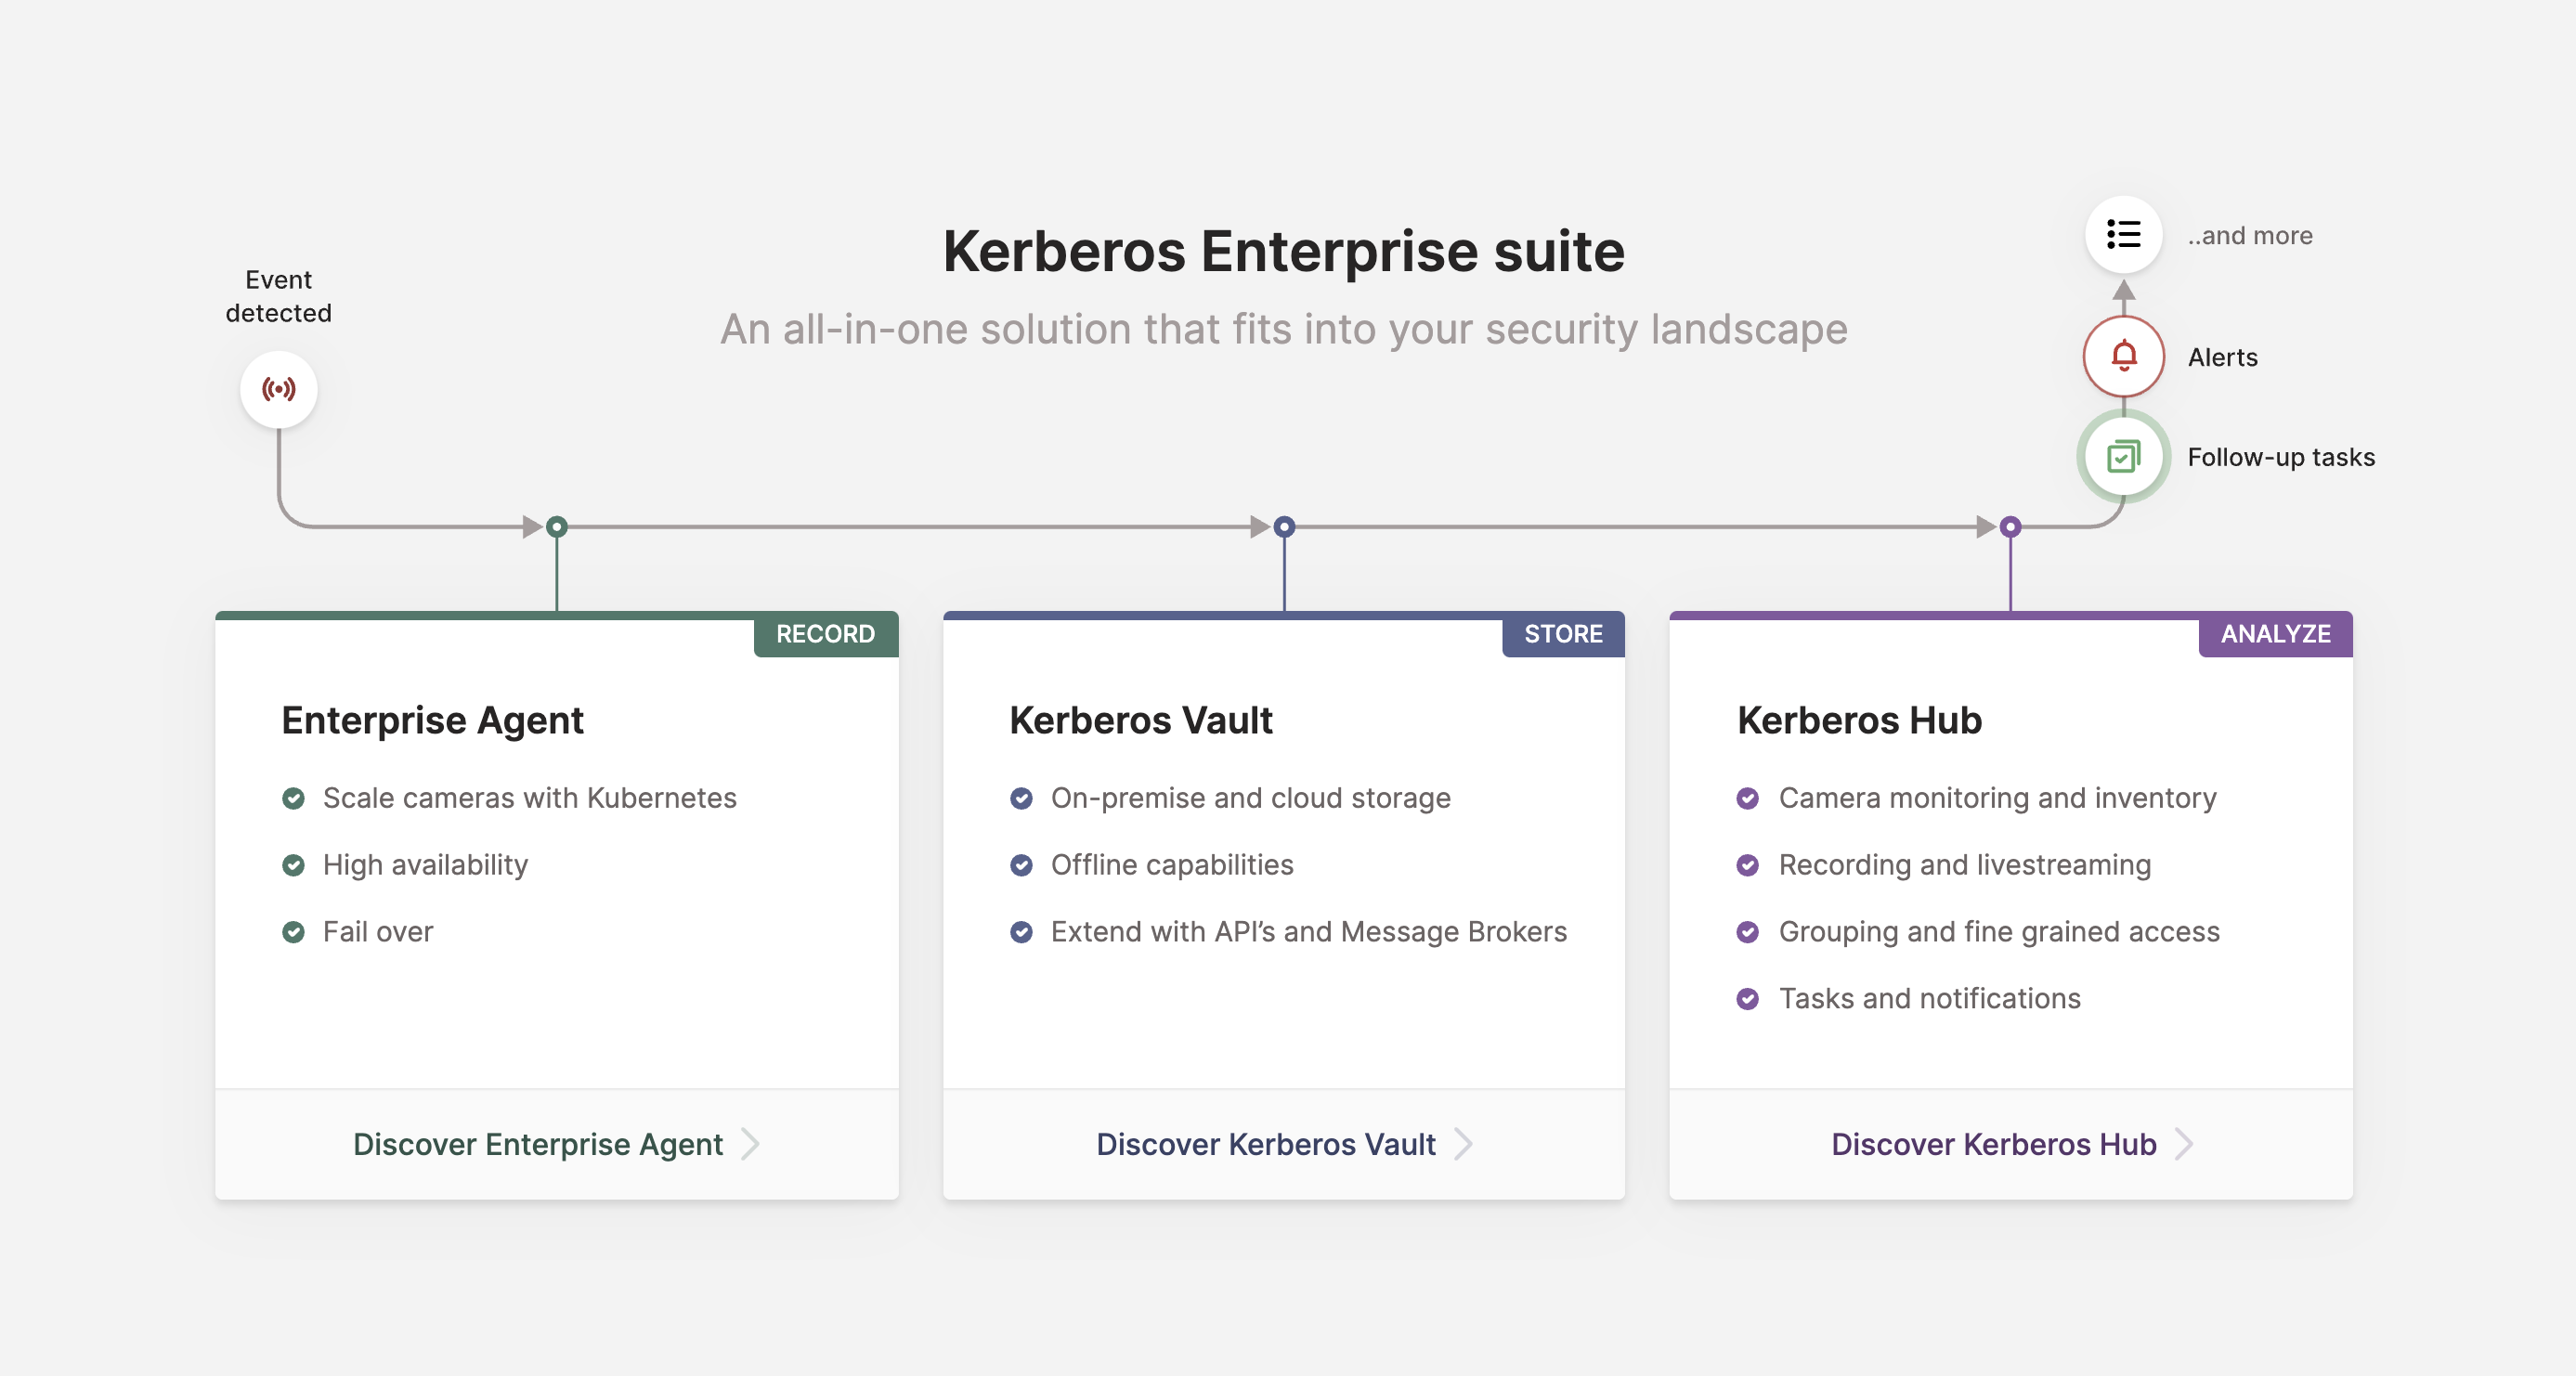 Kerberos Enterprise Suite